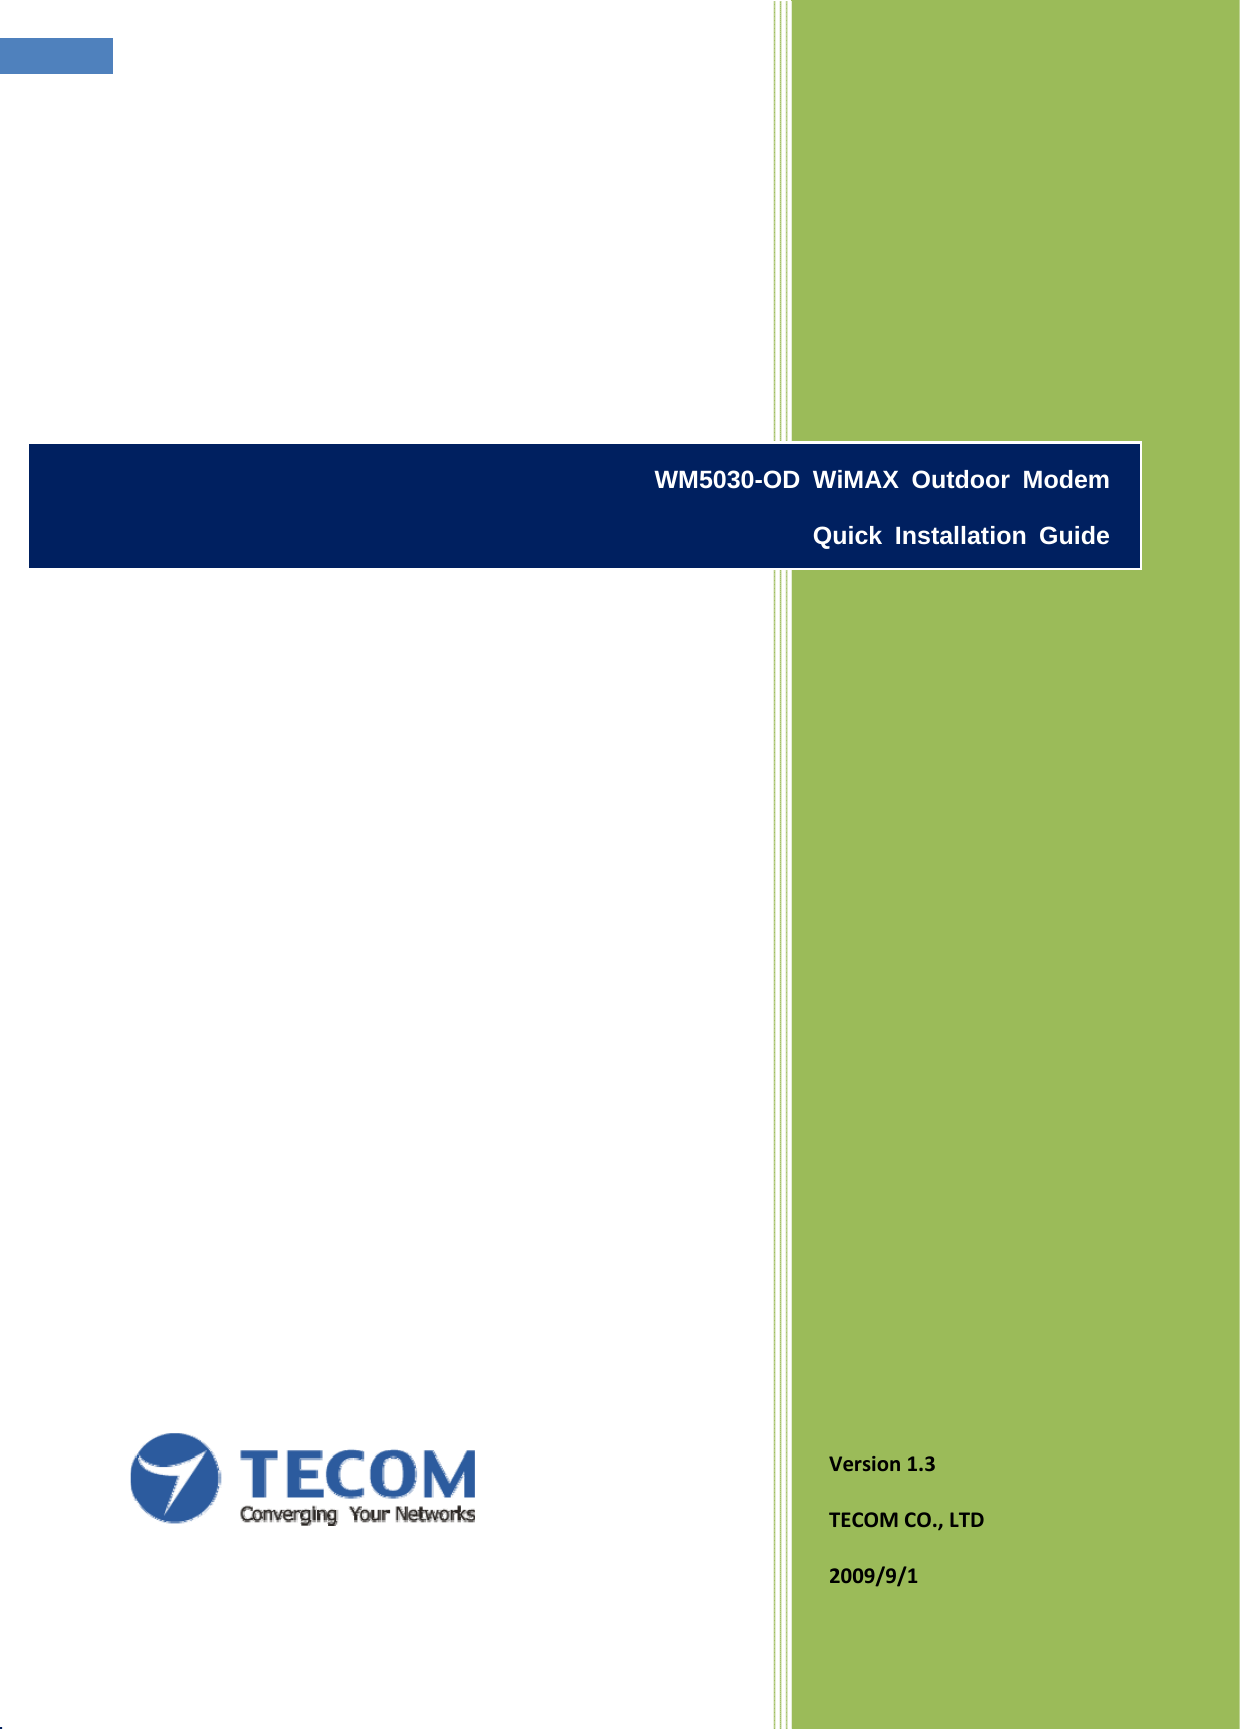                   Version1.3TECOMCO.,LTD2009/9/1WM5030-OD WiMAX Outdoor Modem Quick Installation Guide 